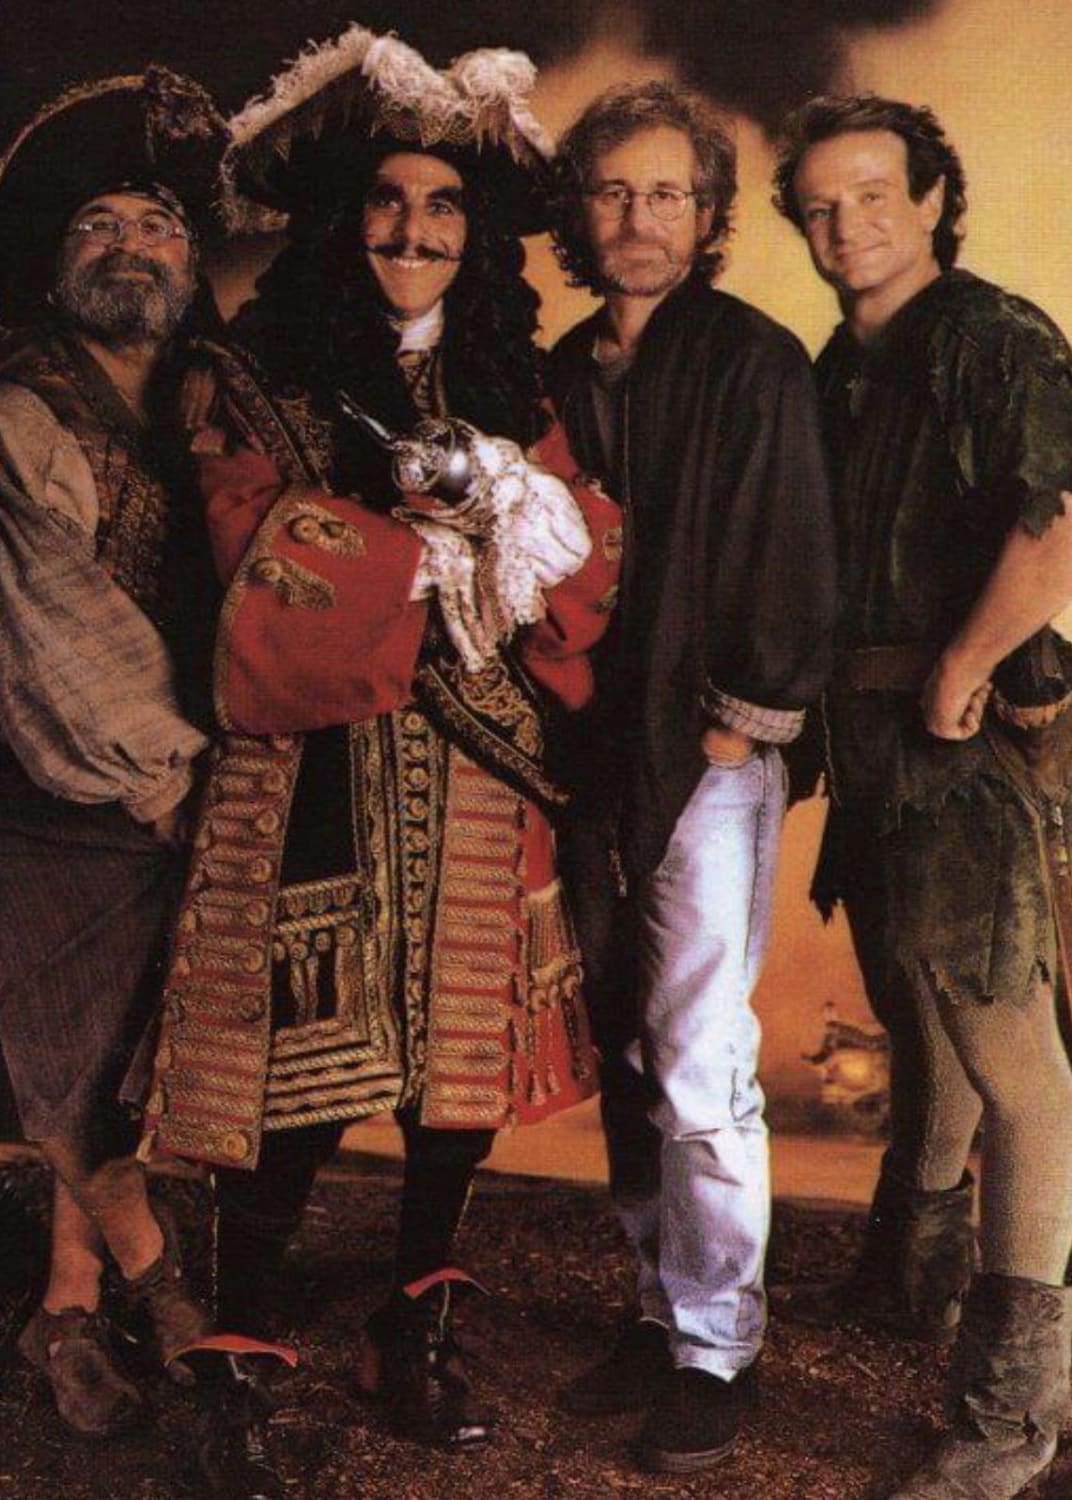 Bob Hoskins, Dustin Hoffman, Steven Spielberg & Robin Williams - Hook, 1991